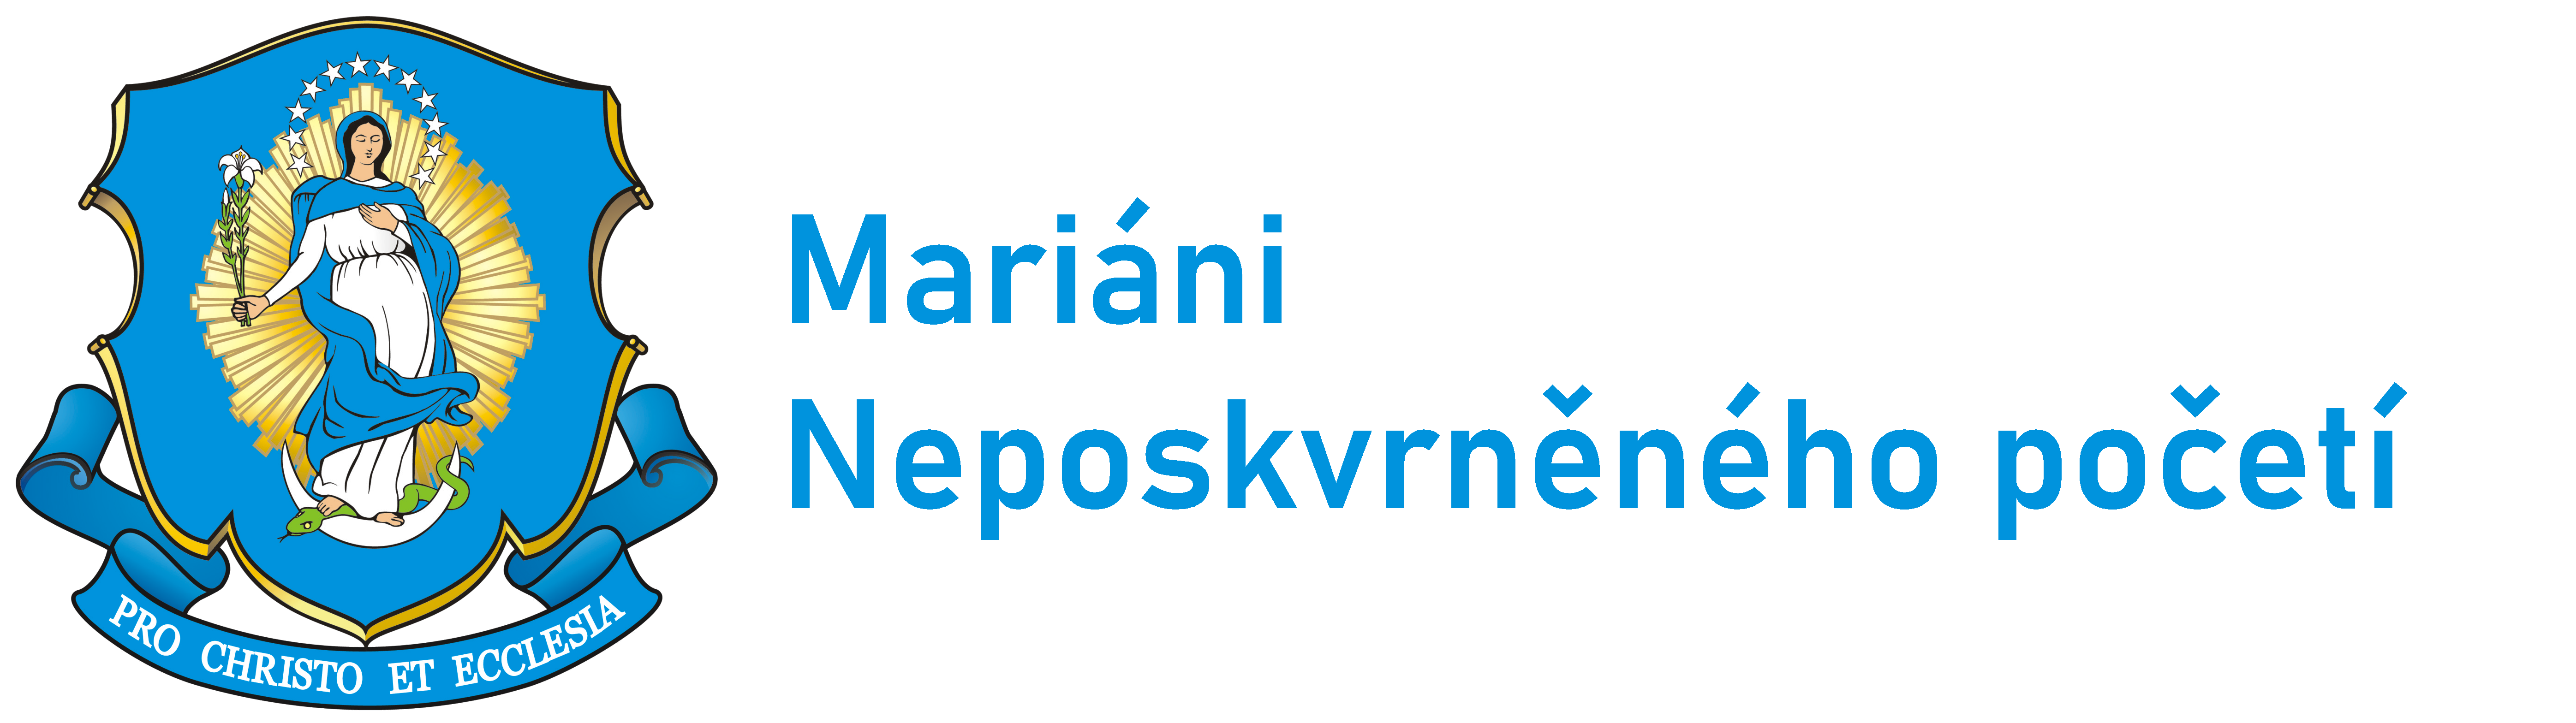 Logo kontakt - Mariáni ČR